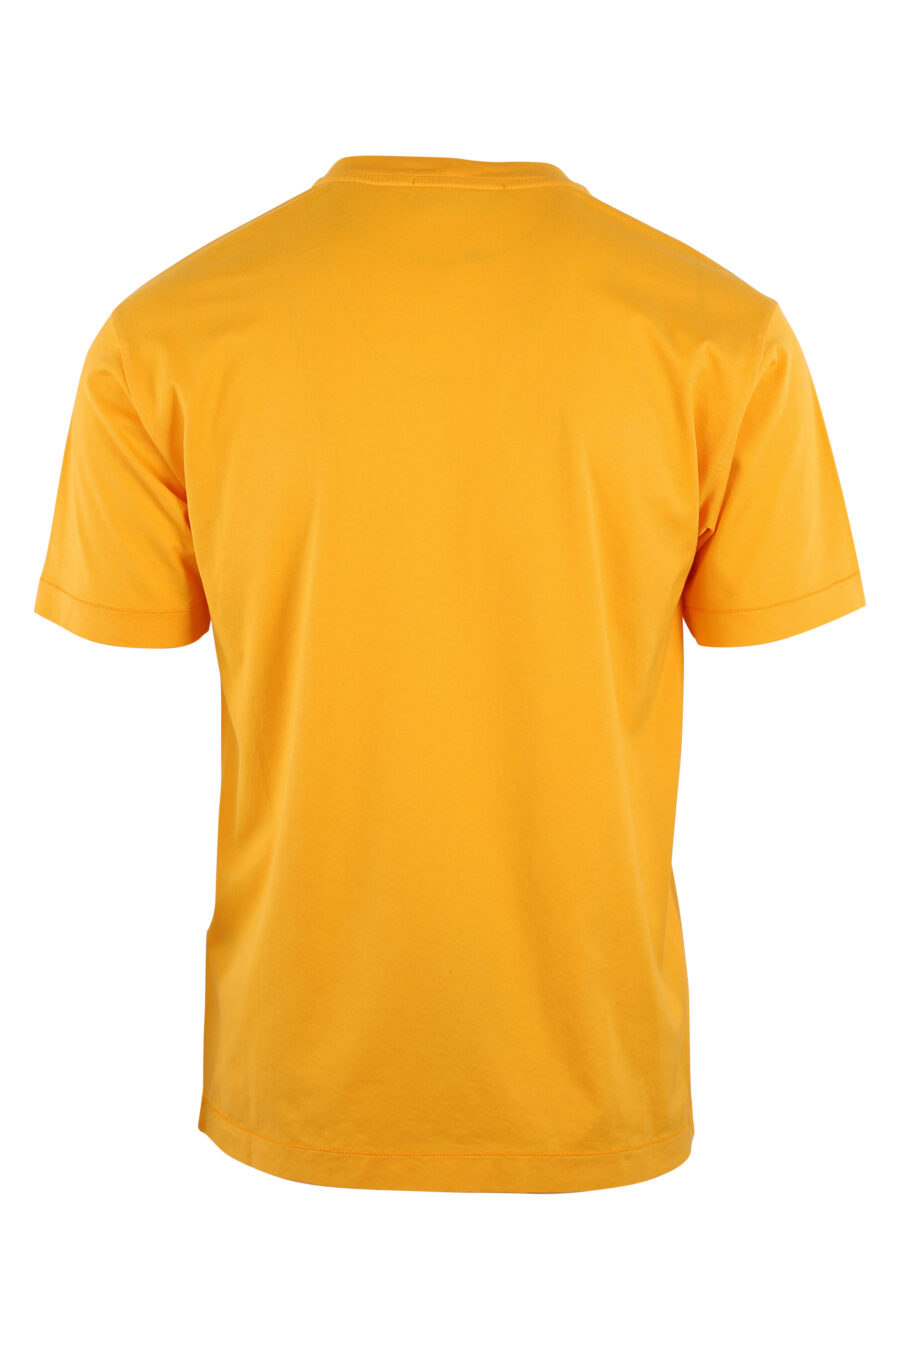 Camiseta amarilla con logo parche - IMG 3137